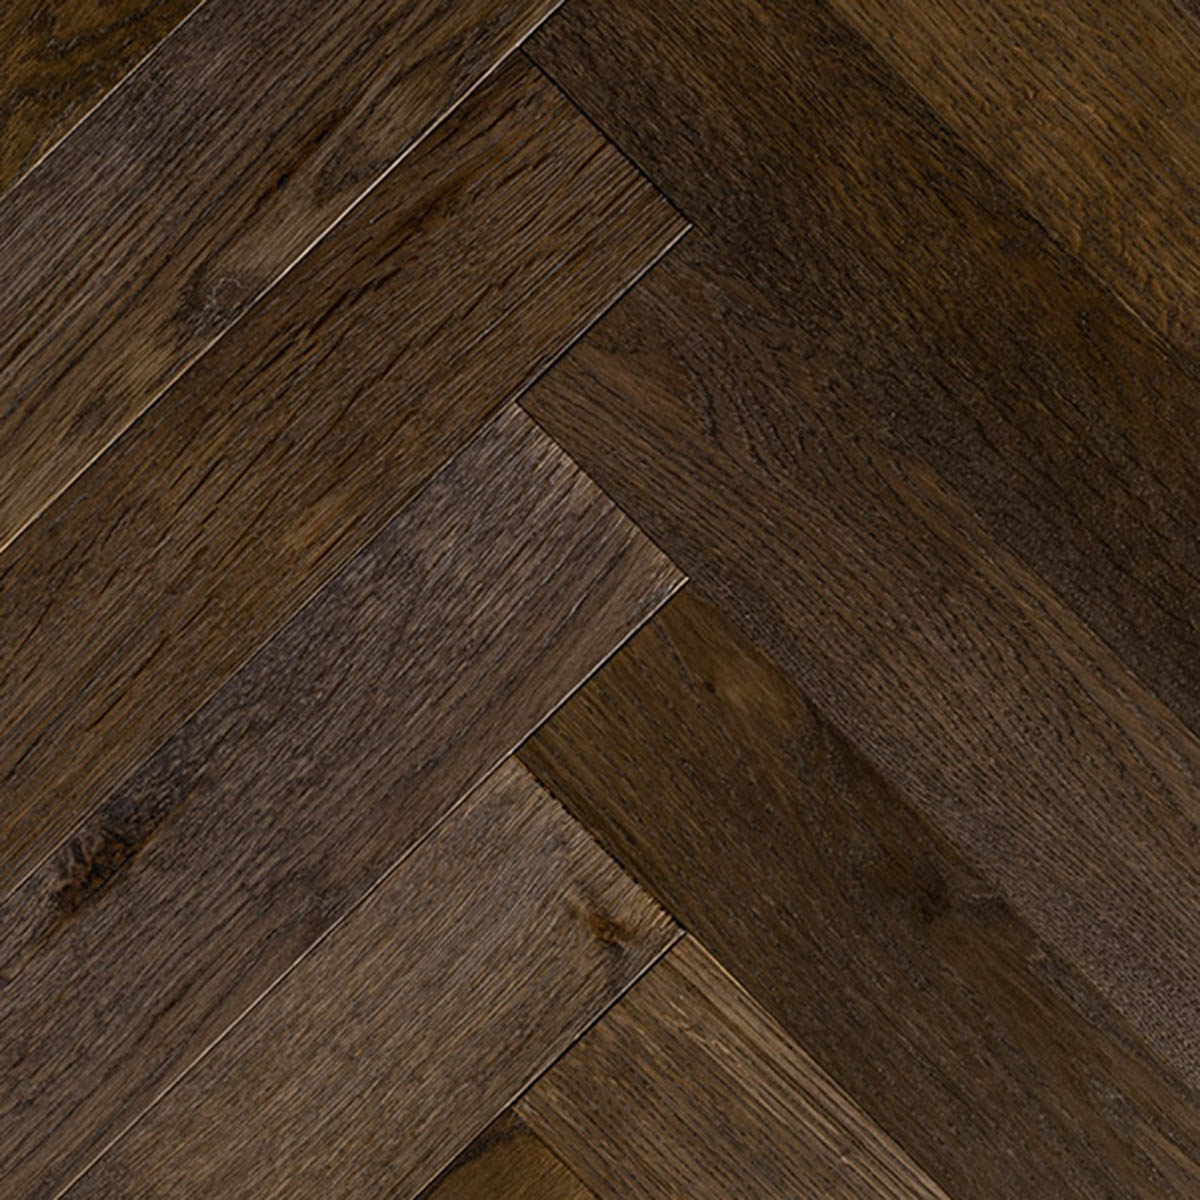 Brookhouse Drive - Rustic-Grade Oak Herringbone Floor 280mm x 70mm